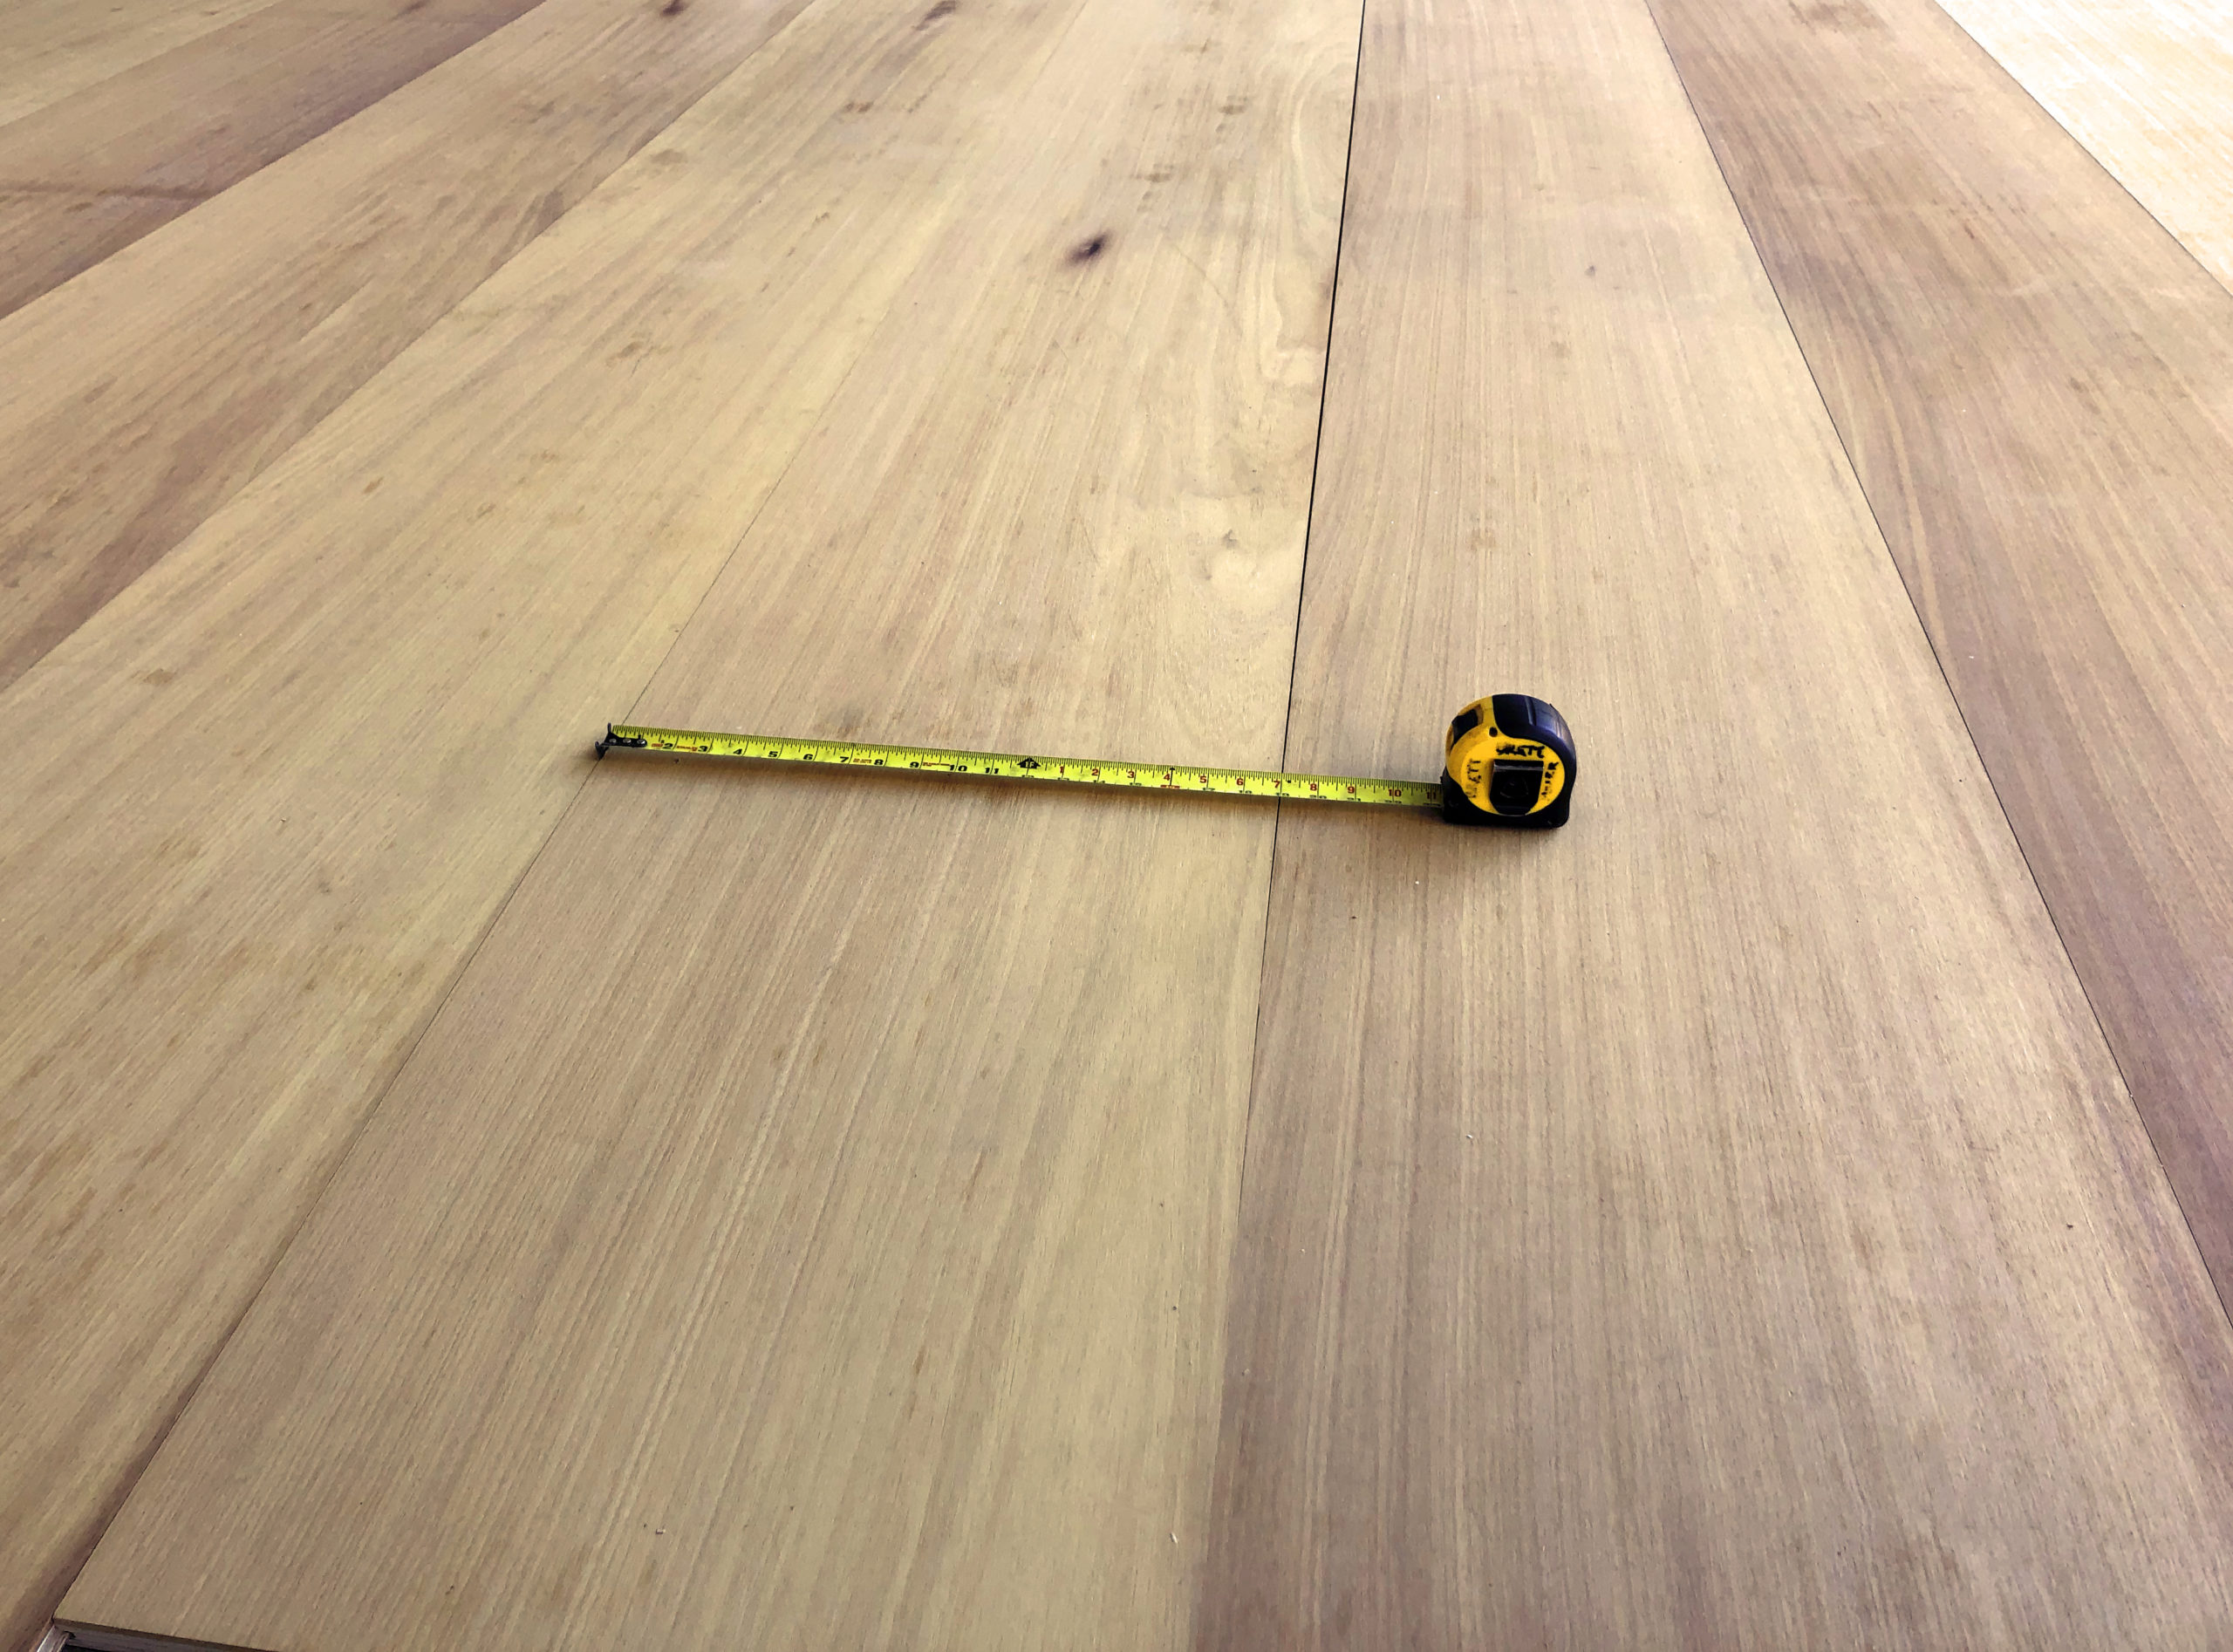 Iroko wood flooring